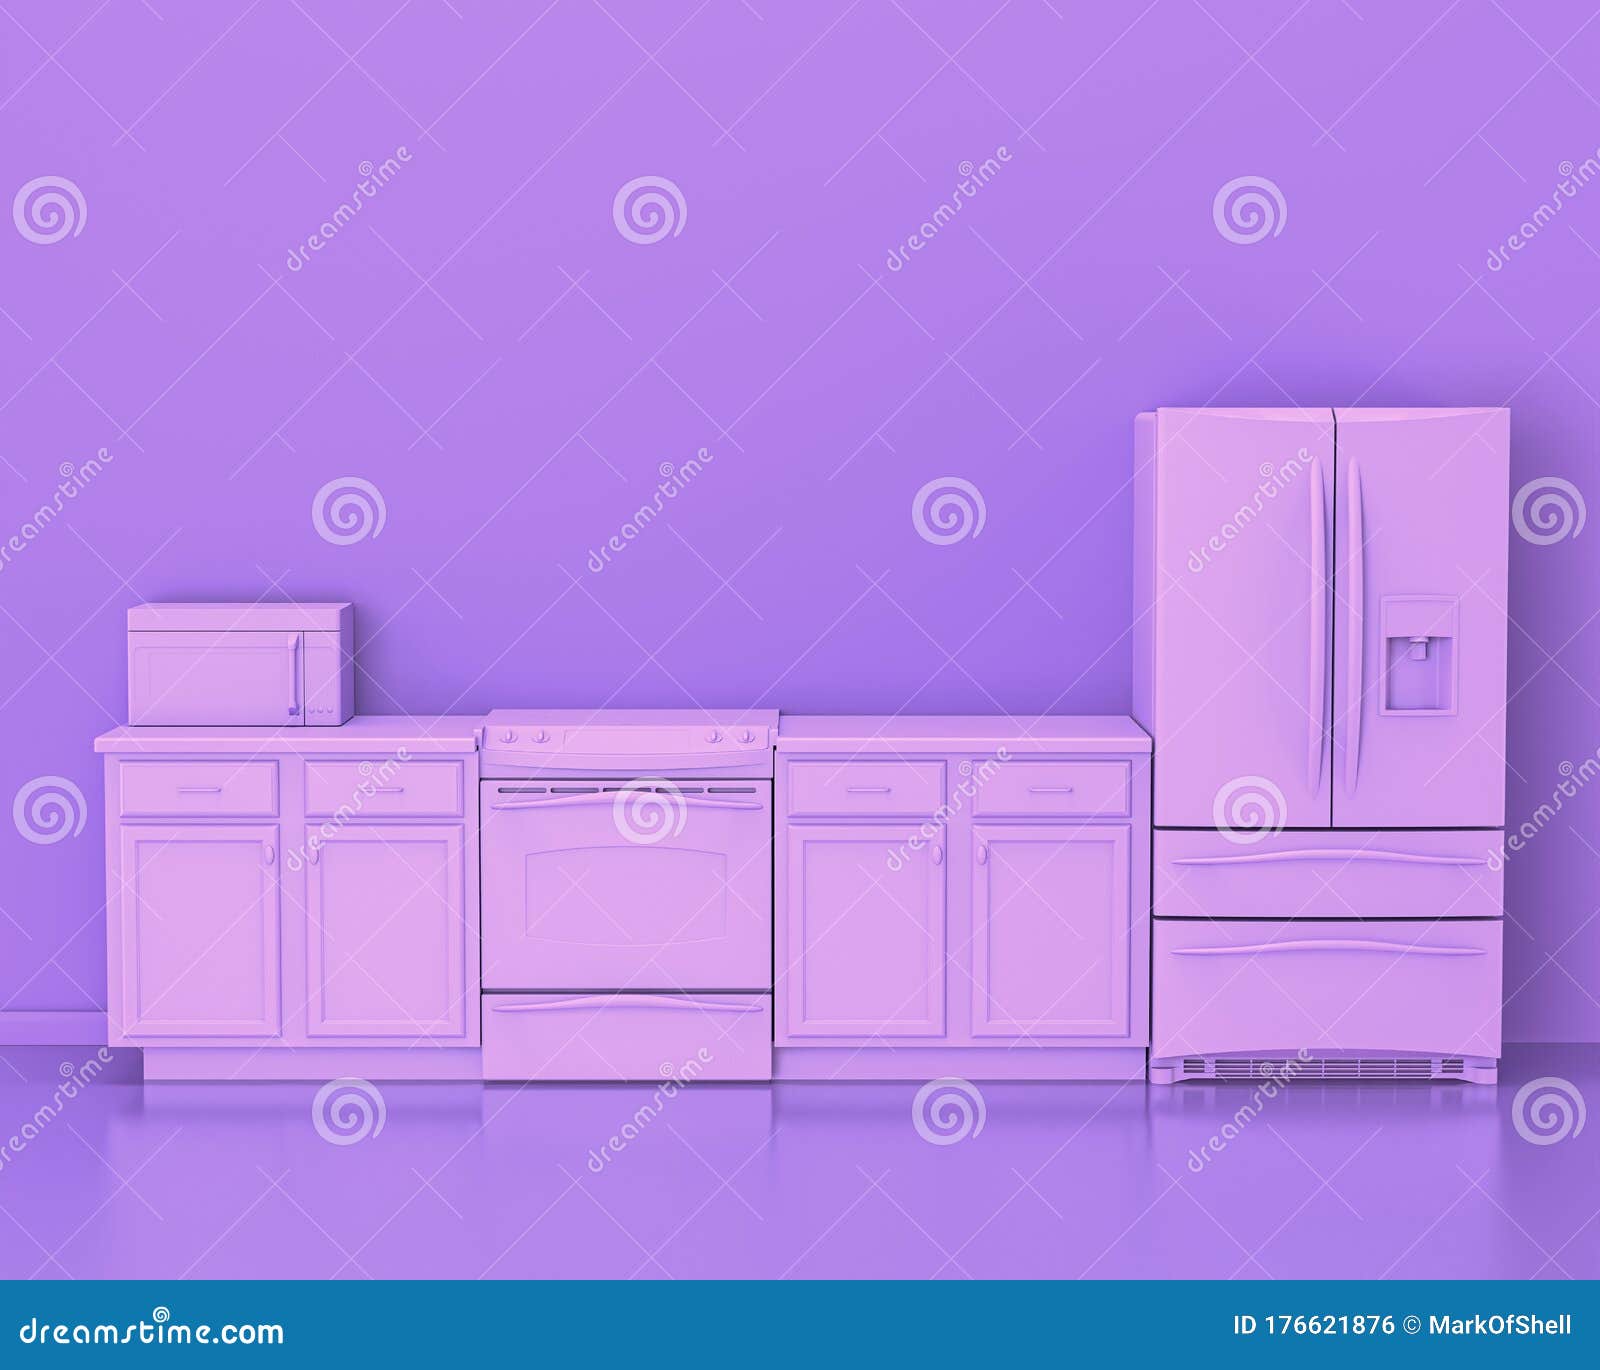 Kitchen Appliances in Monochrome Single Pink Purple Color Room